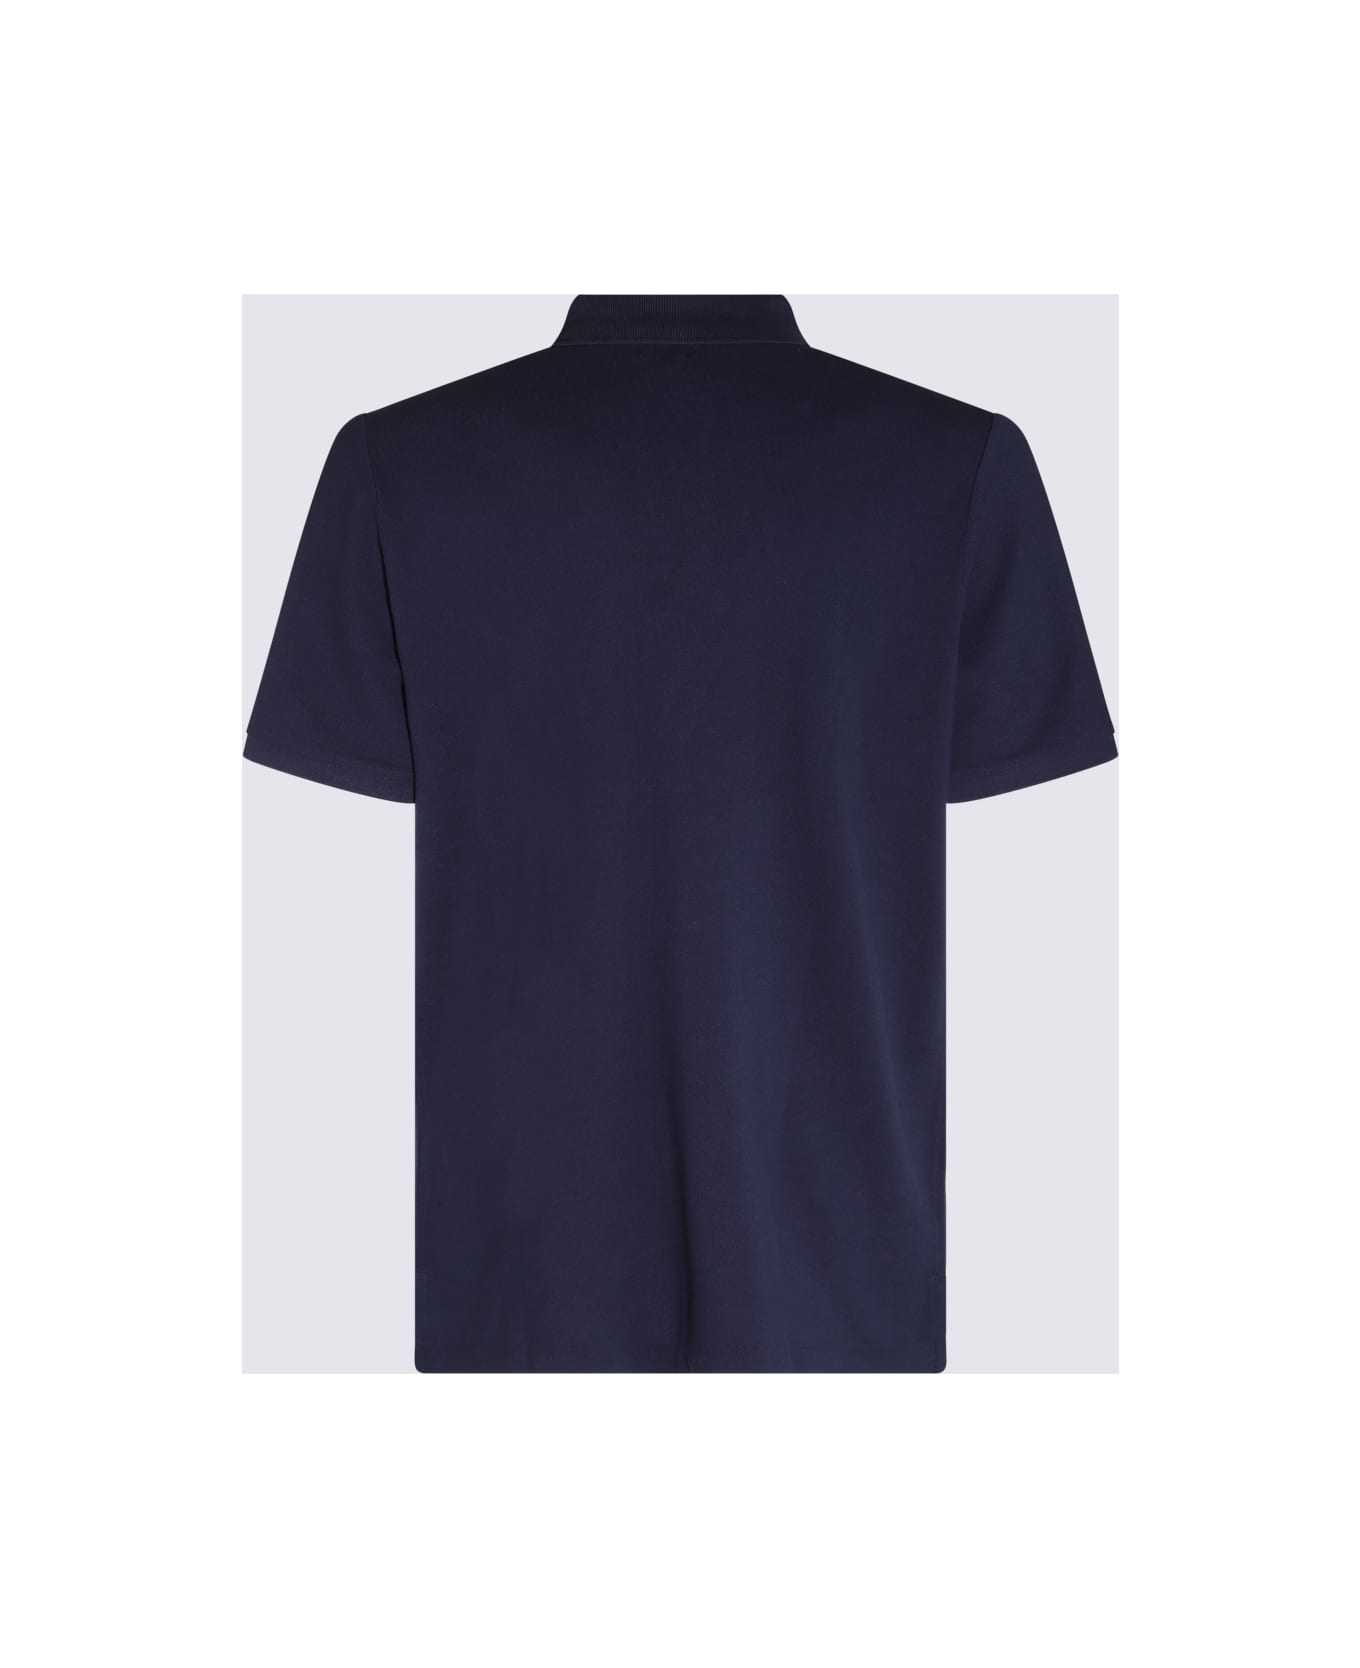 Polo Ralph Lauren Navy Blue Cotton Polo Shirt - NEWPORT NAVY ポロシャツ